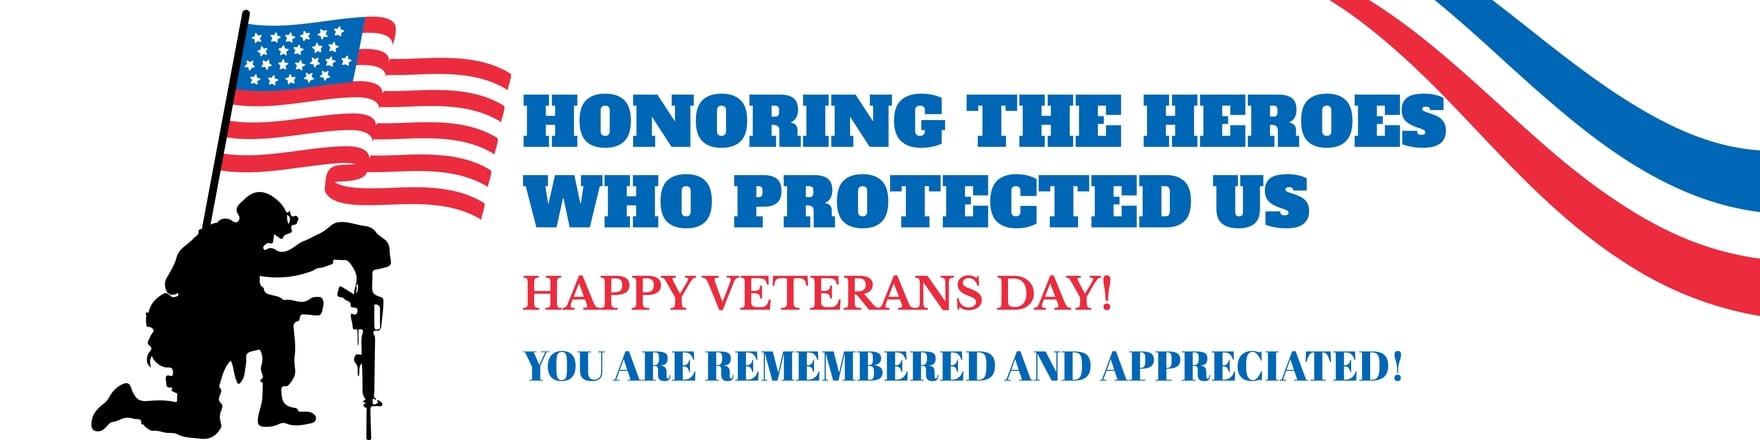 Veterans Day Twitch Banner in Illustrator, PSD, EPS, SVG, JPG, PNG